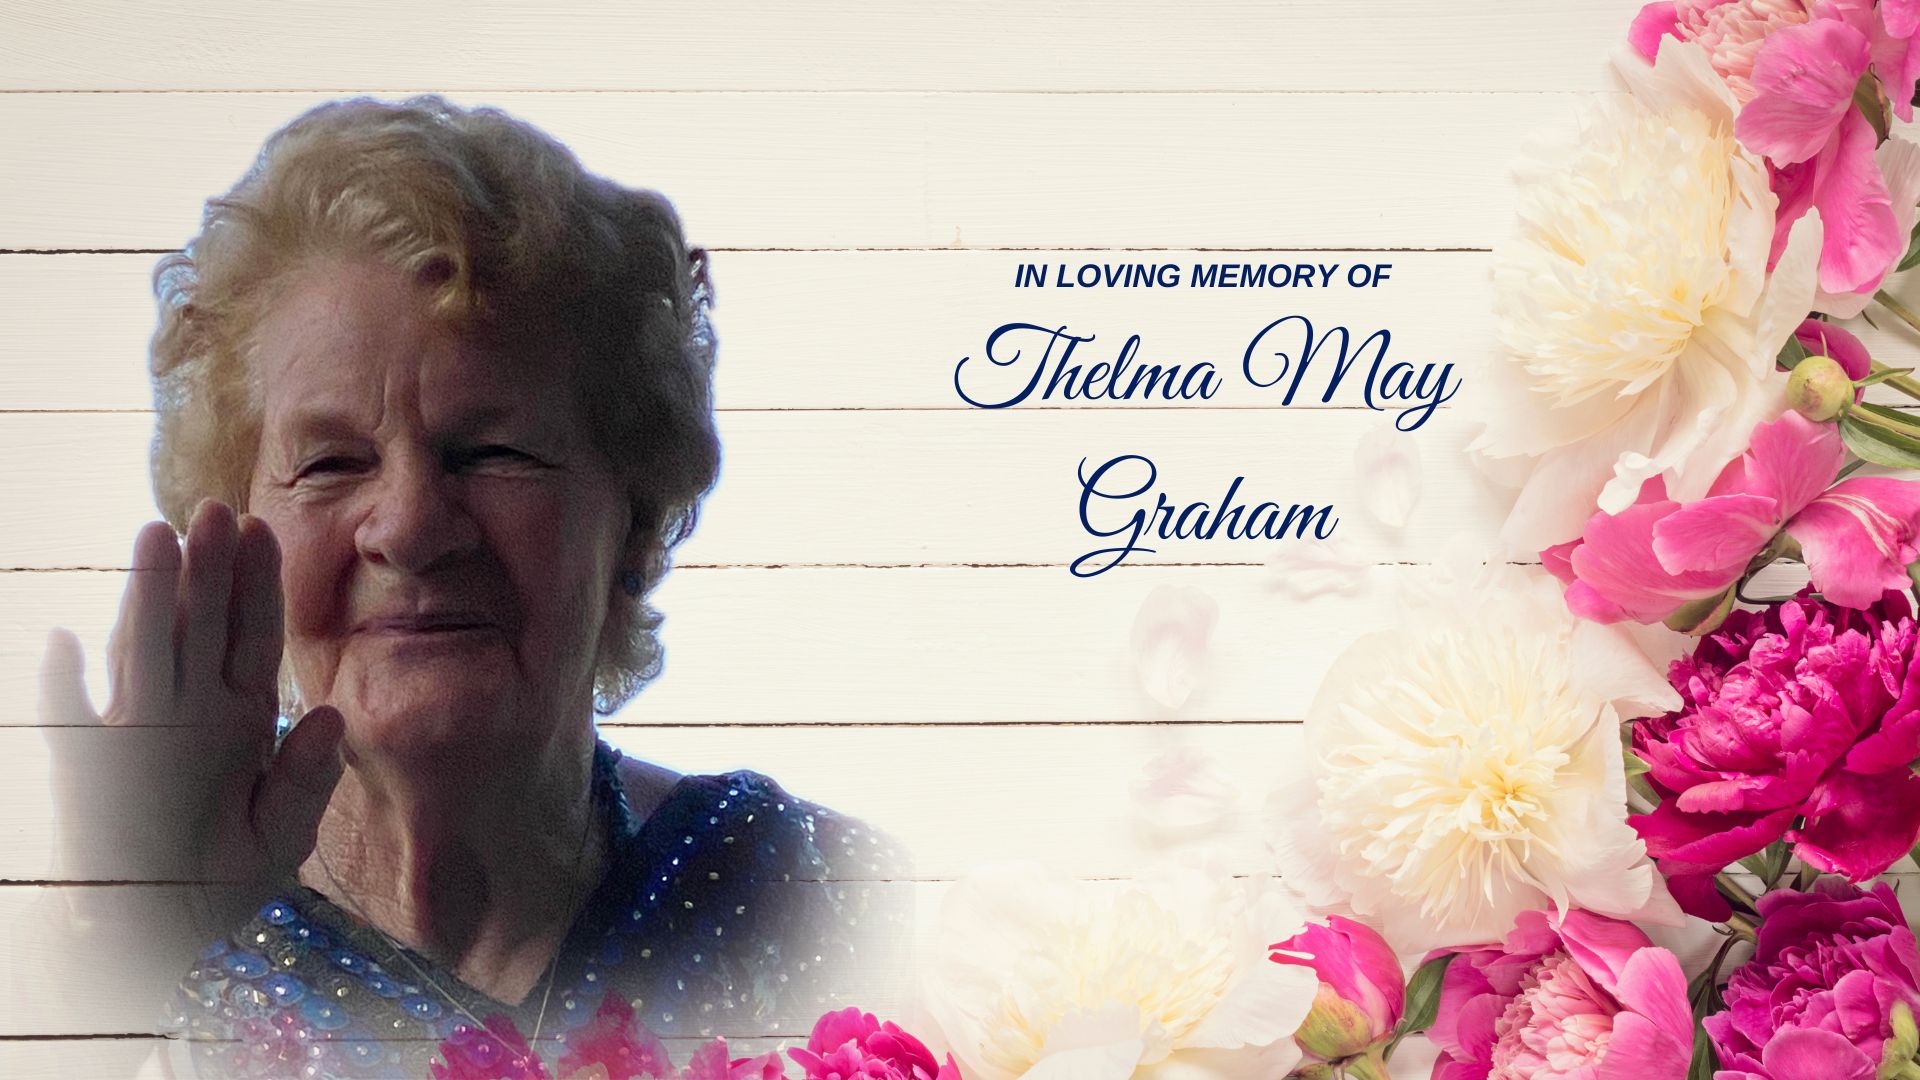 Thelma Graham